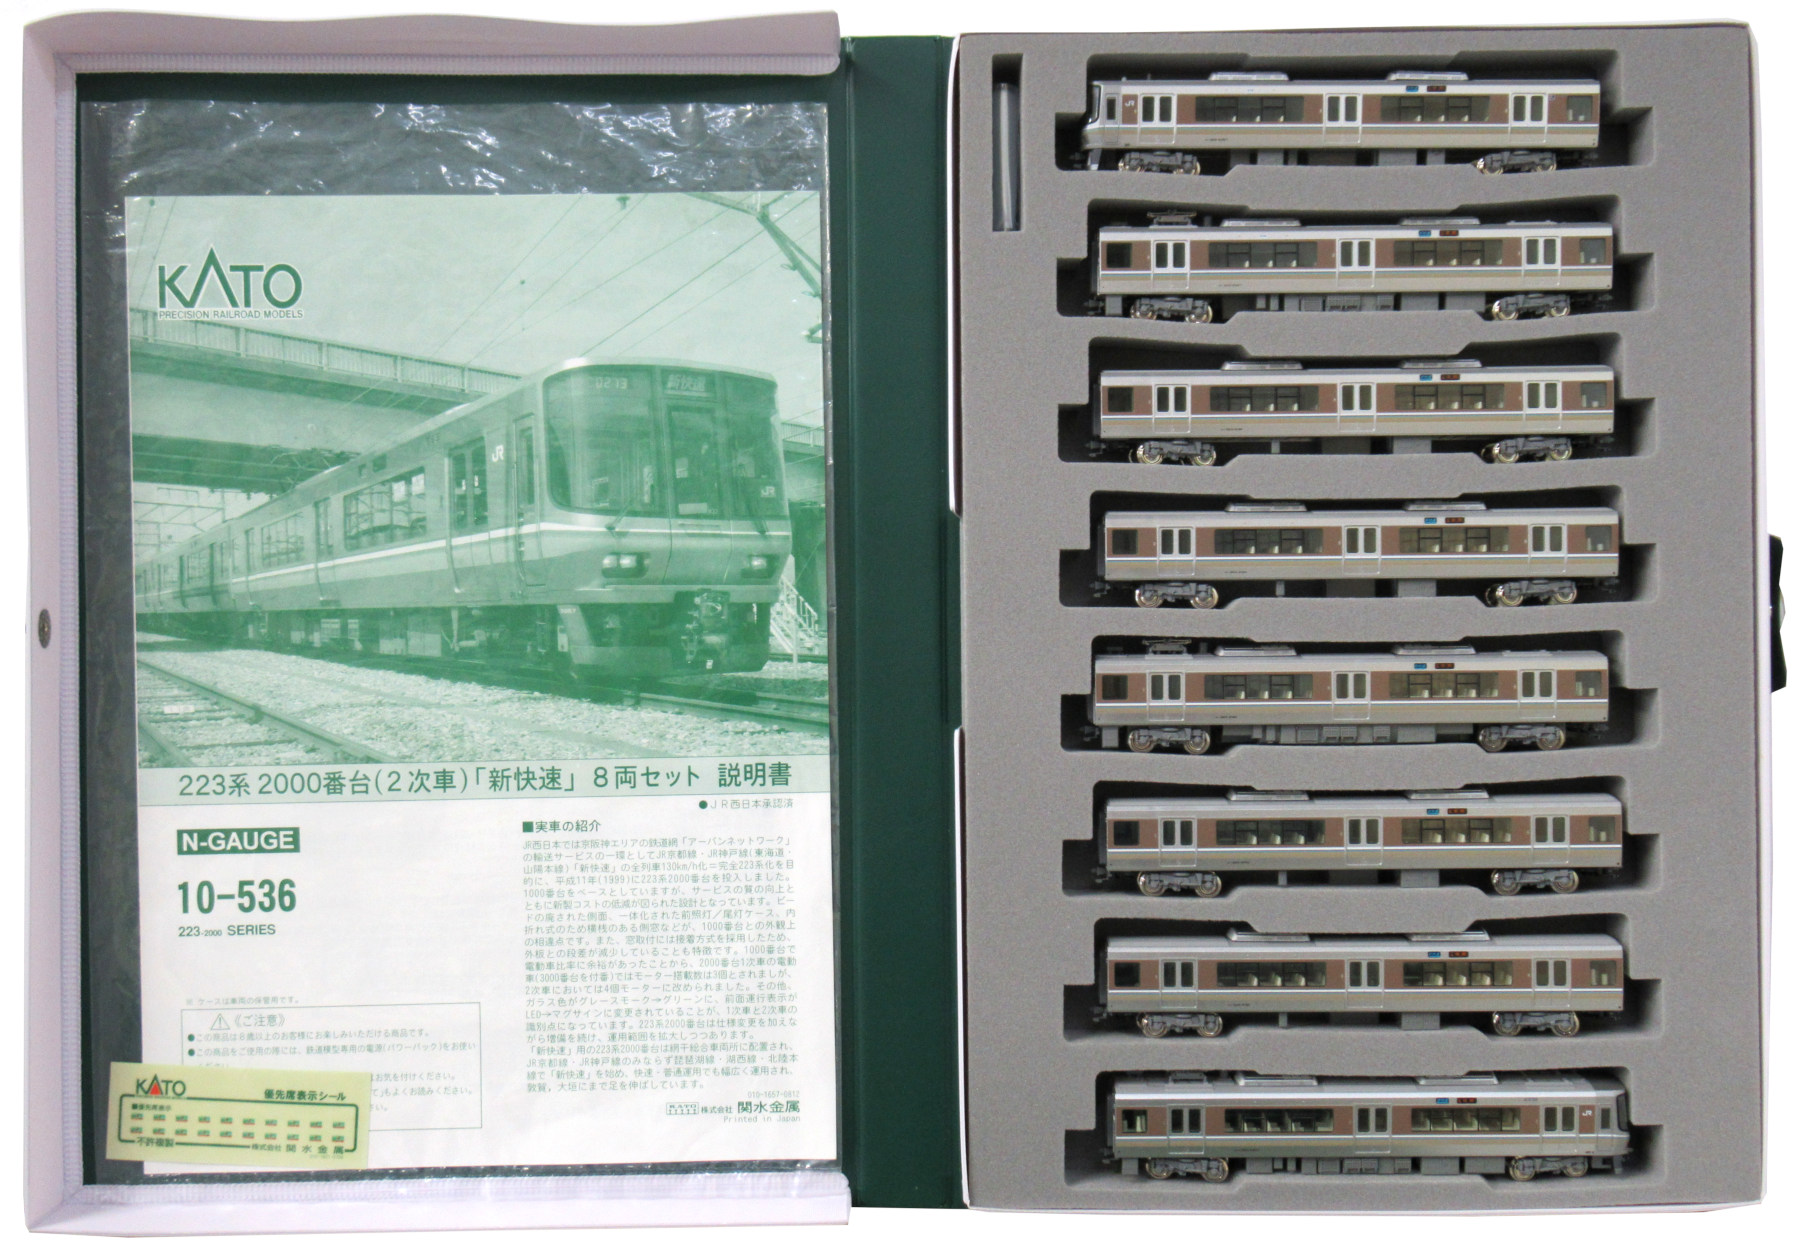 KATO Nゲージ 223系2000番台 新快速 4両セット 10-1677 鉄道模型 電車 